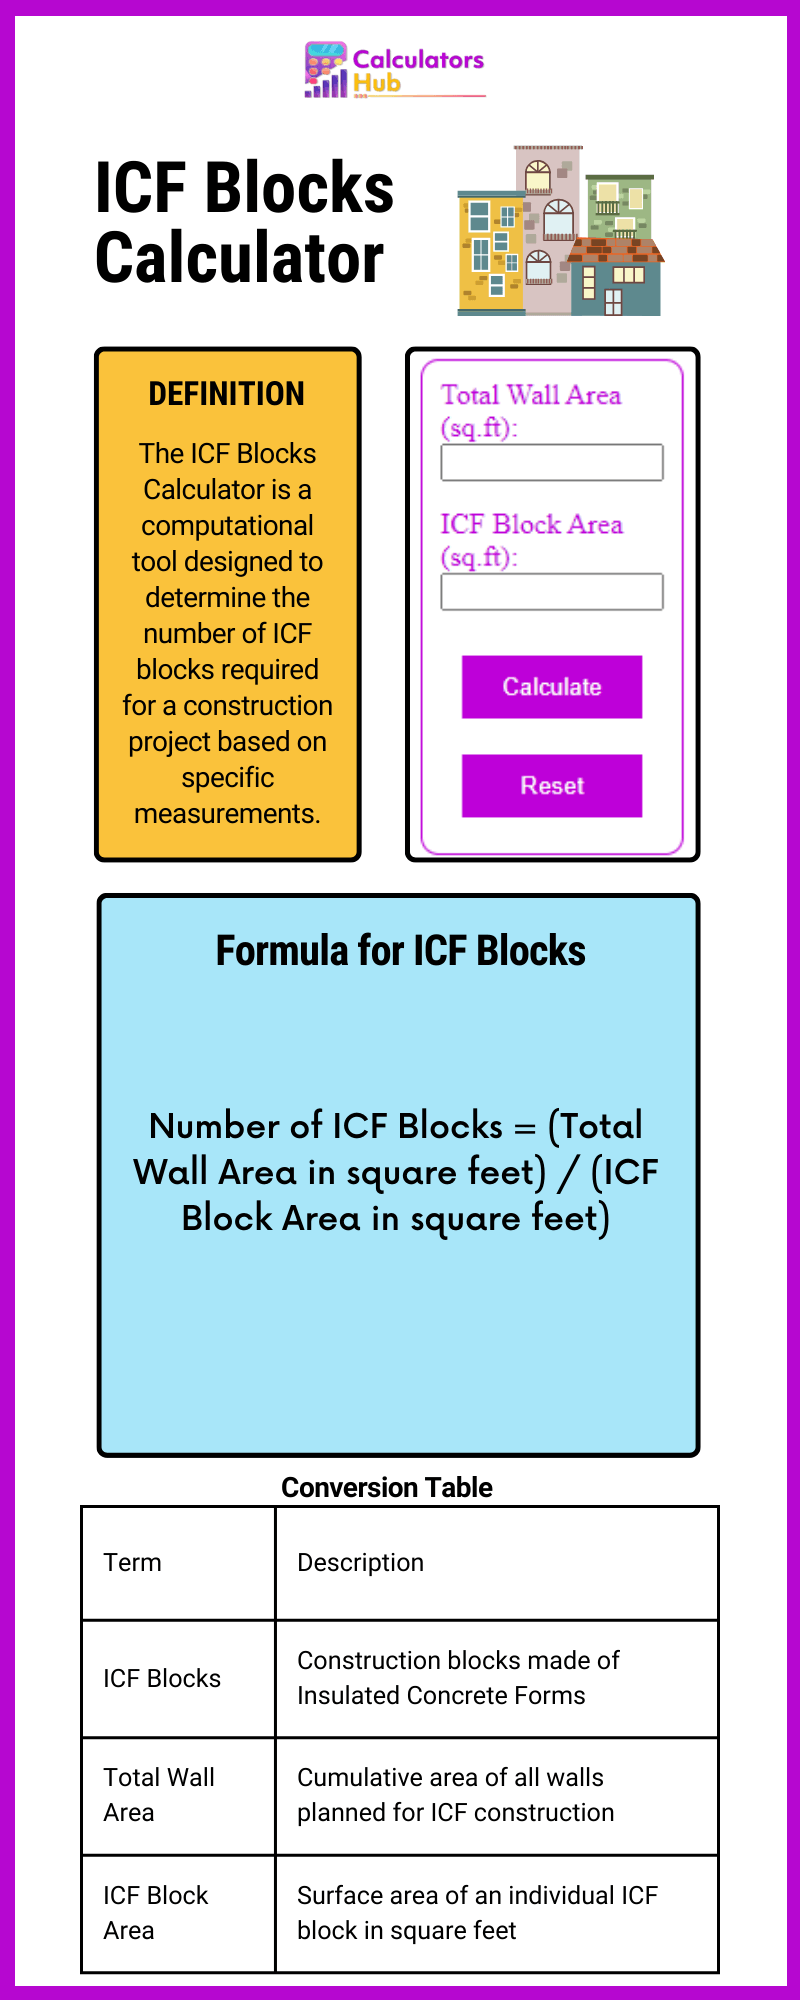 ICF Blocks Calculator